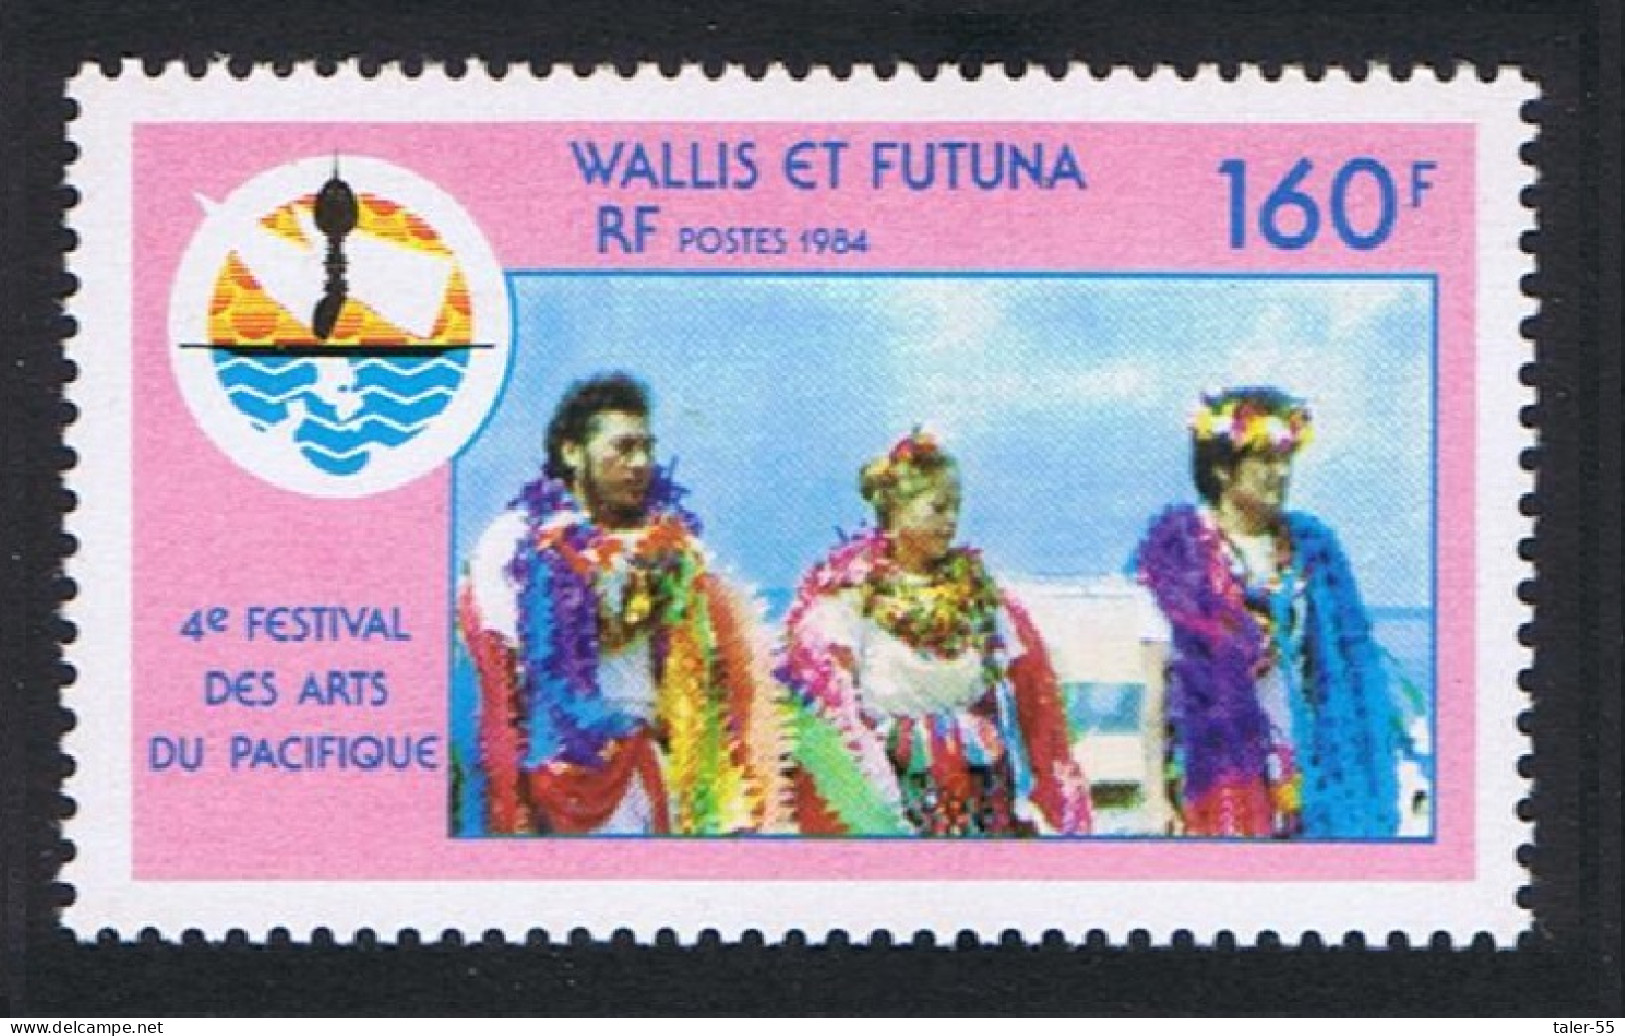 Wallis And Futuna 4th Pacific Arts Festival 1984 MNH SG#456 Sc#318 - Ongebruikt